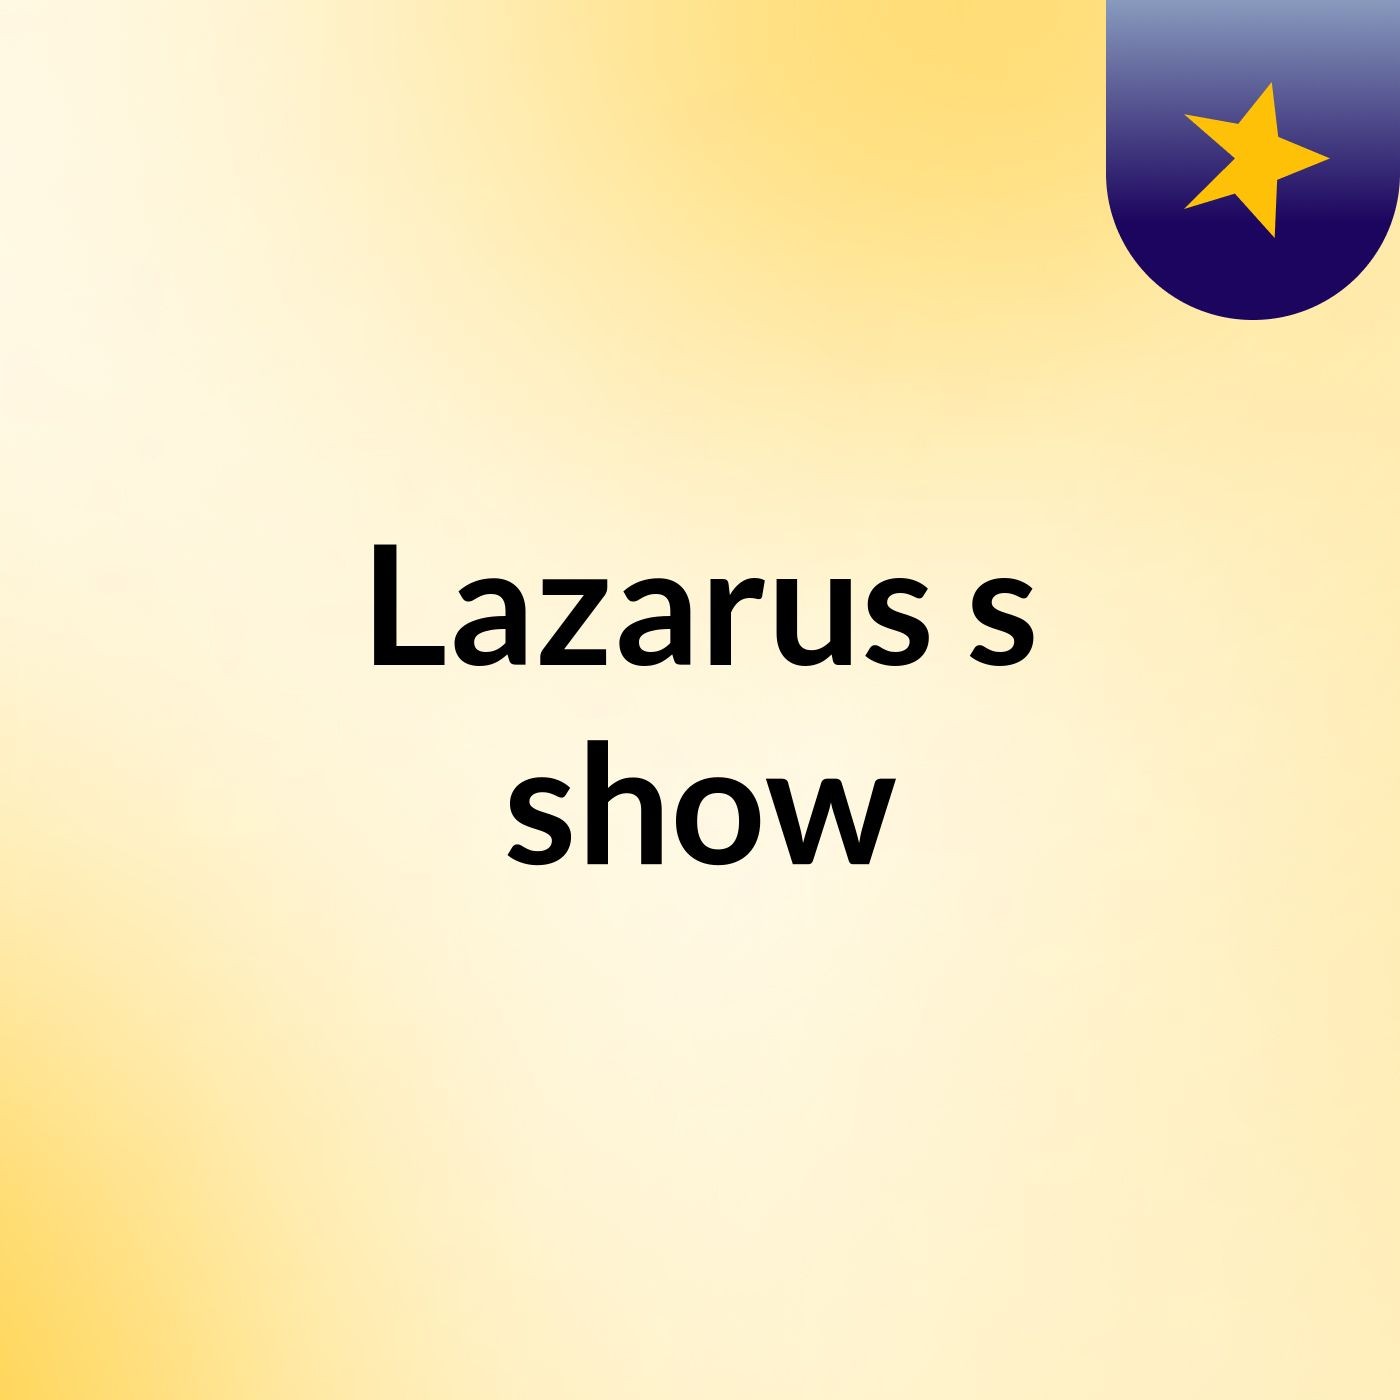 Episode 2 - Lazarus's show